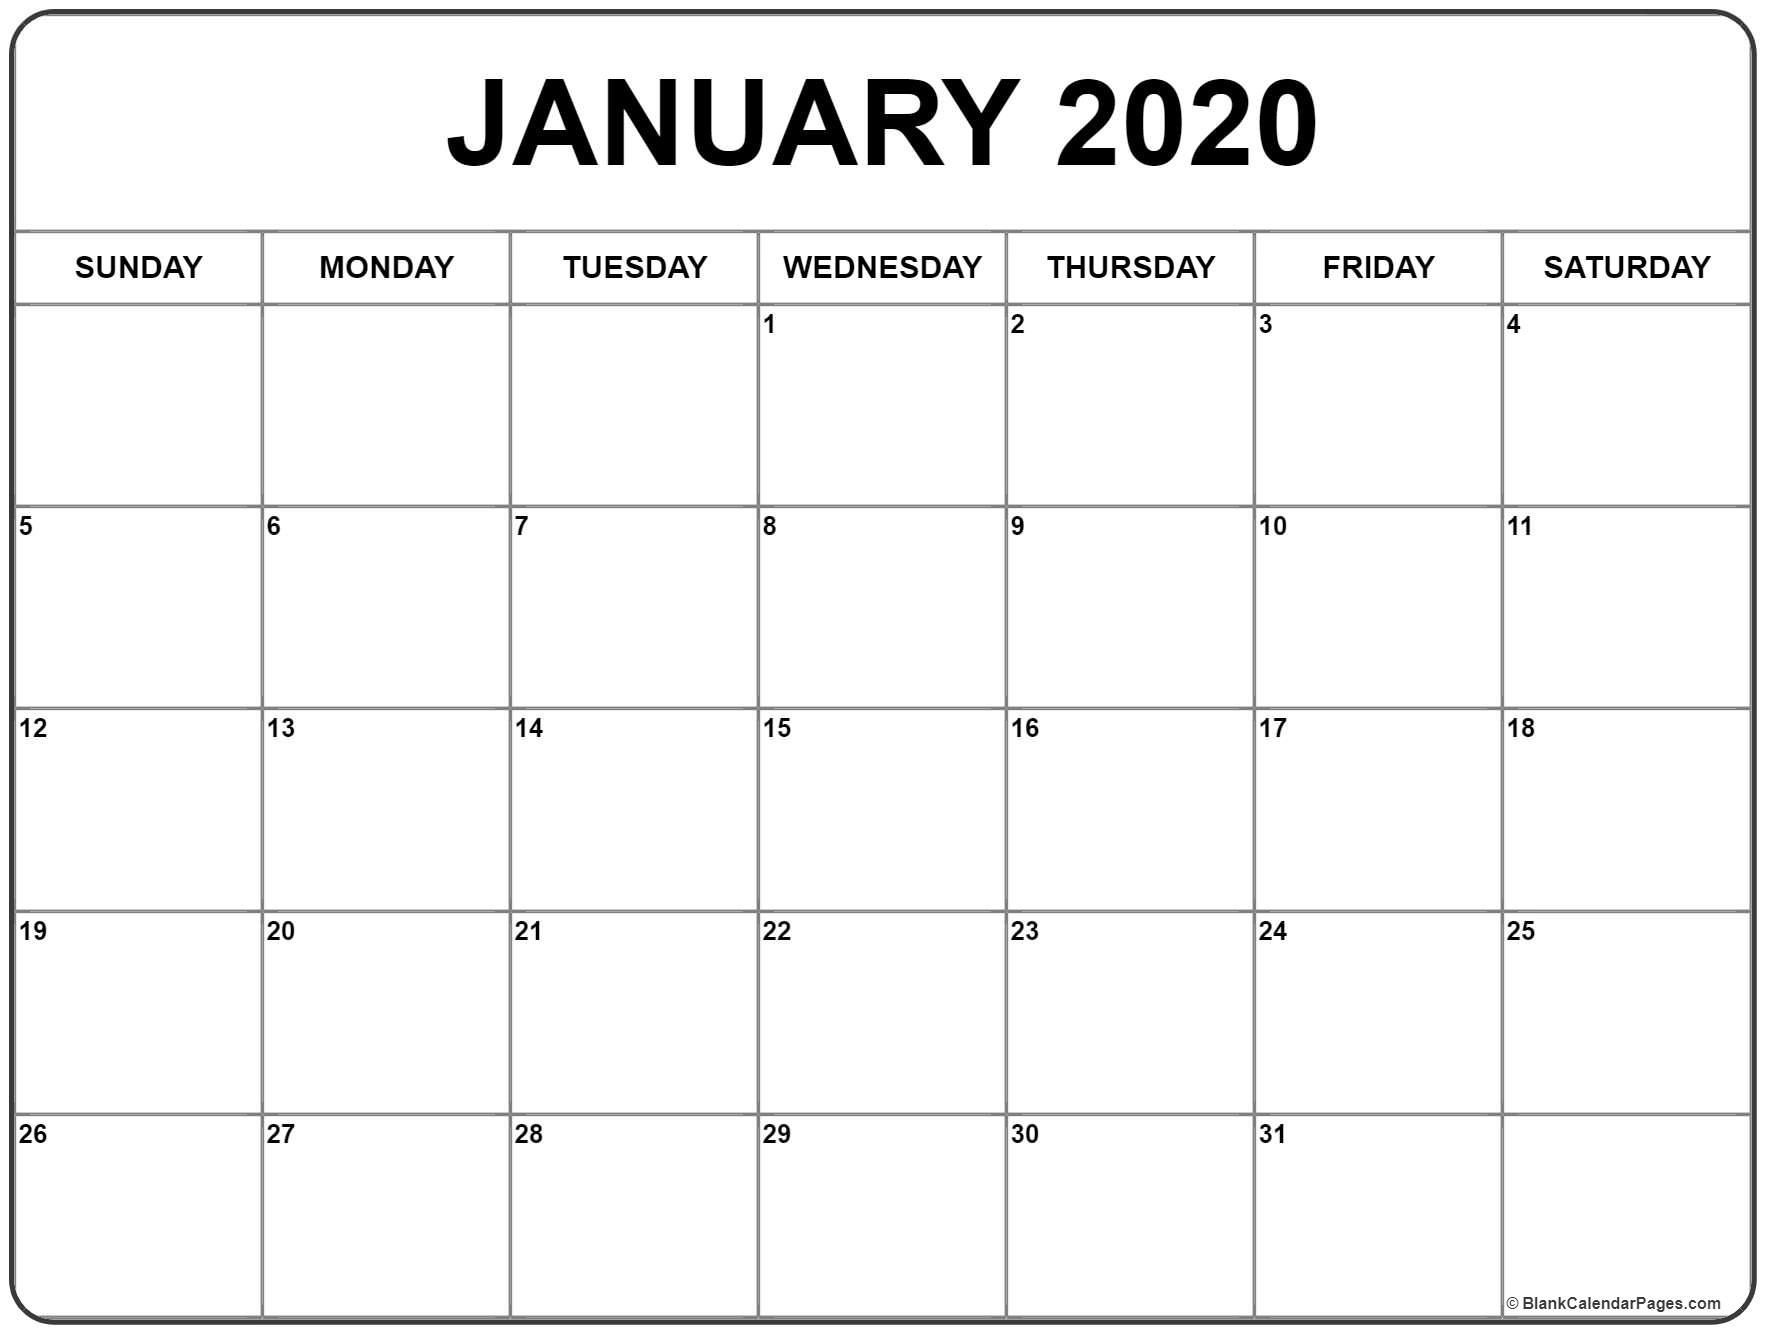 January 2020 Calendar | Free Printable Monthly Calendars Incredible Free Printable Calendar January 2020